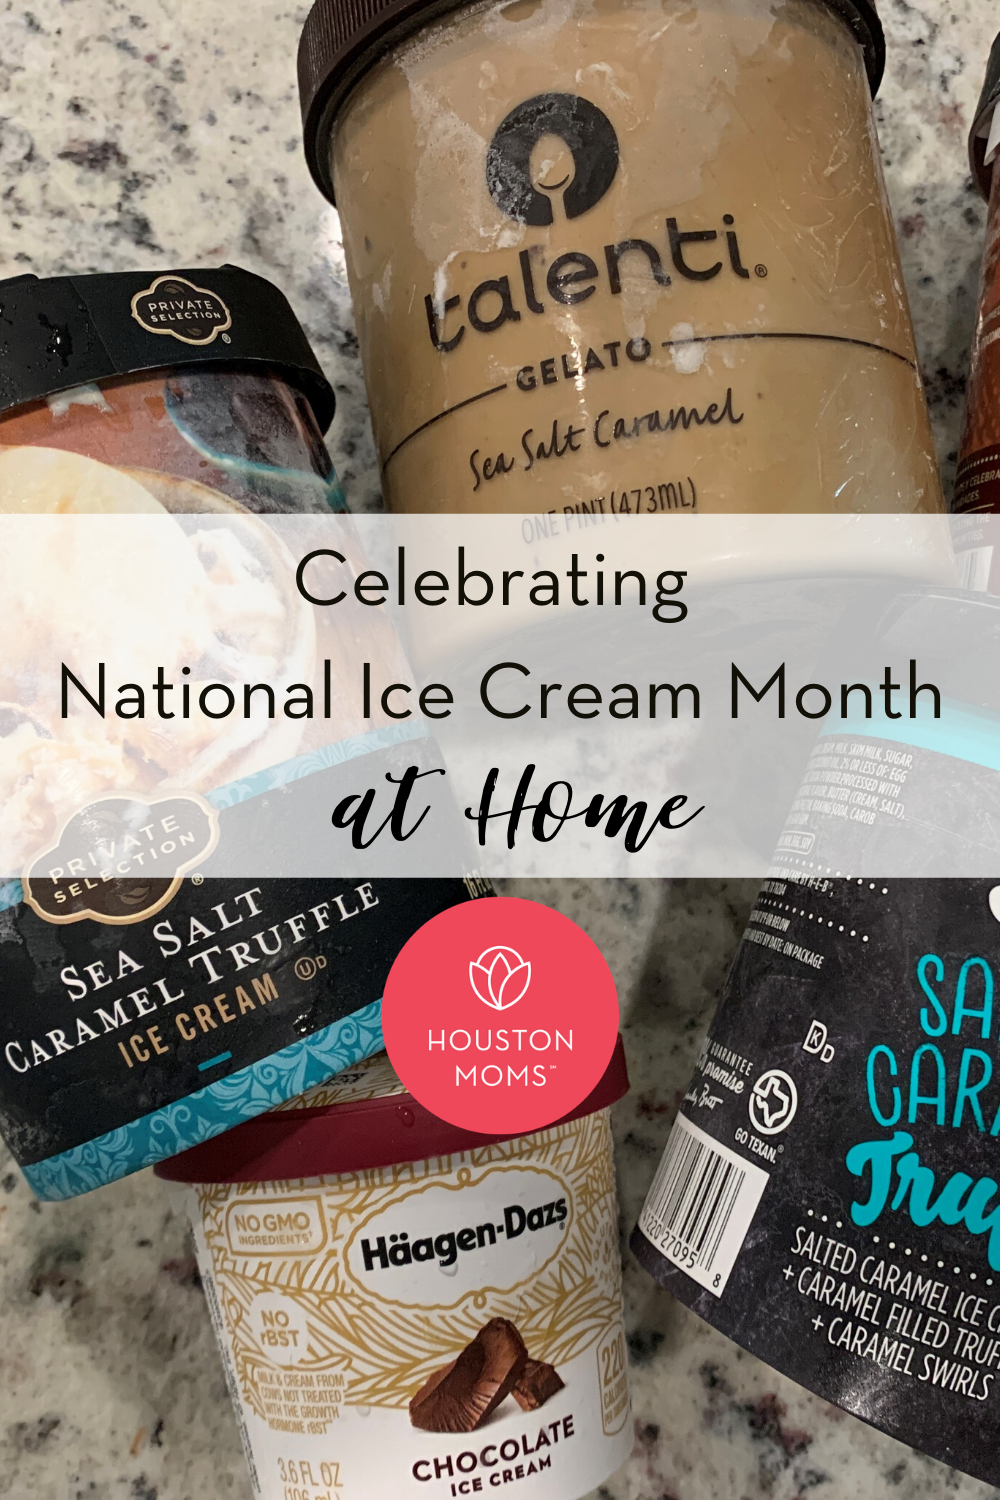 Houston Moms "Celebrating National Ice Cream Month at Home" #houstonmomsblog #houstonmoms #momsaroundhouston